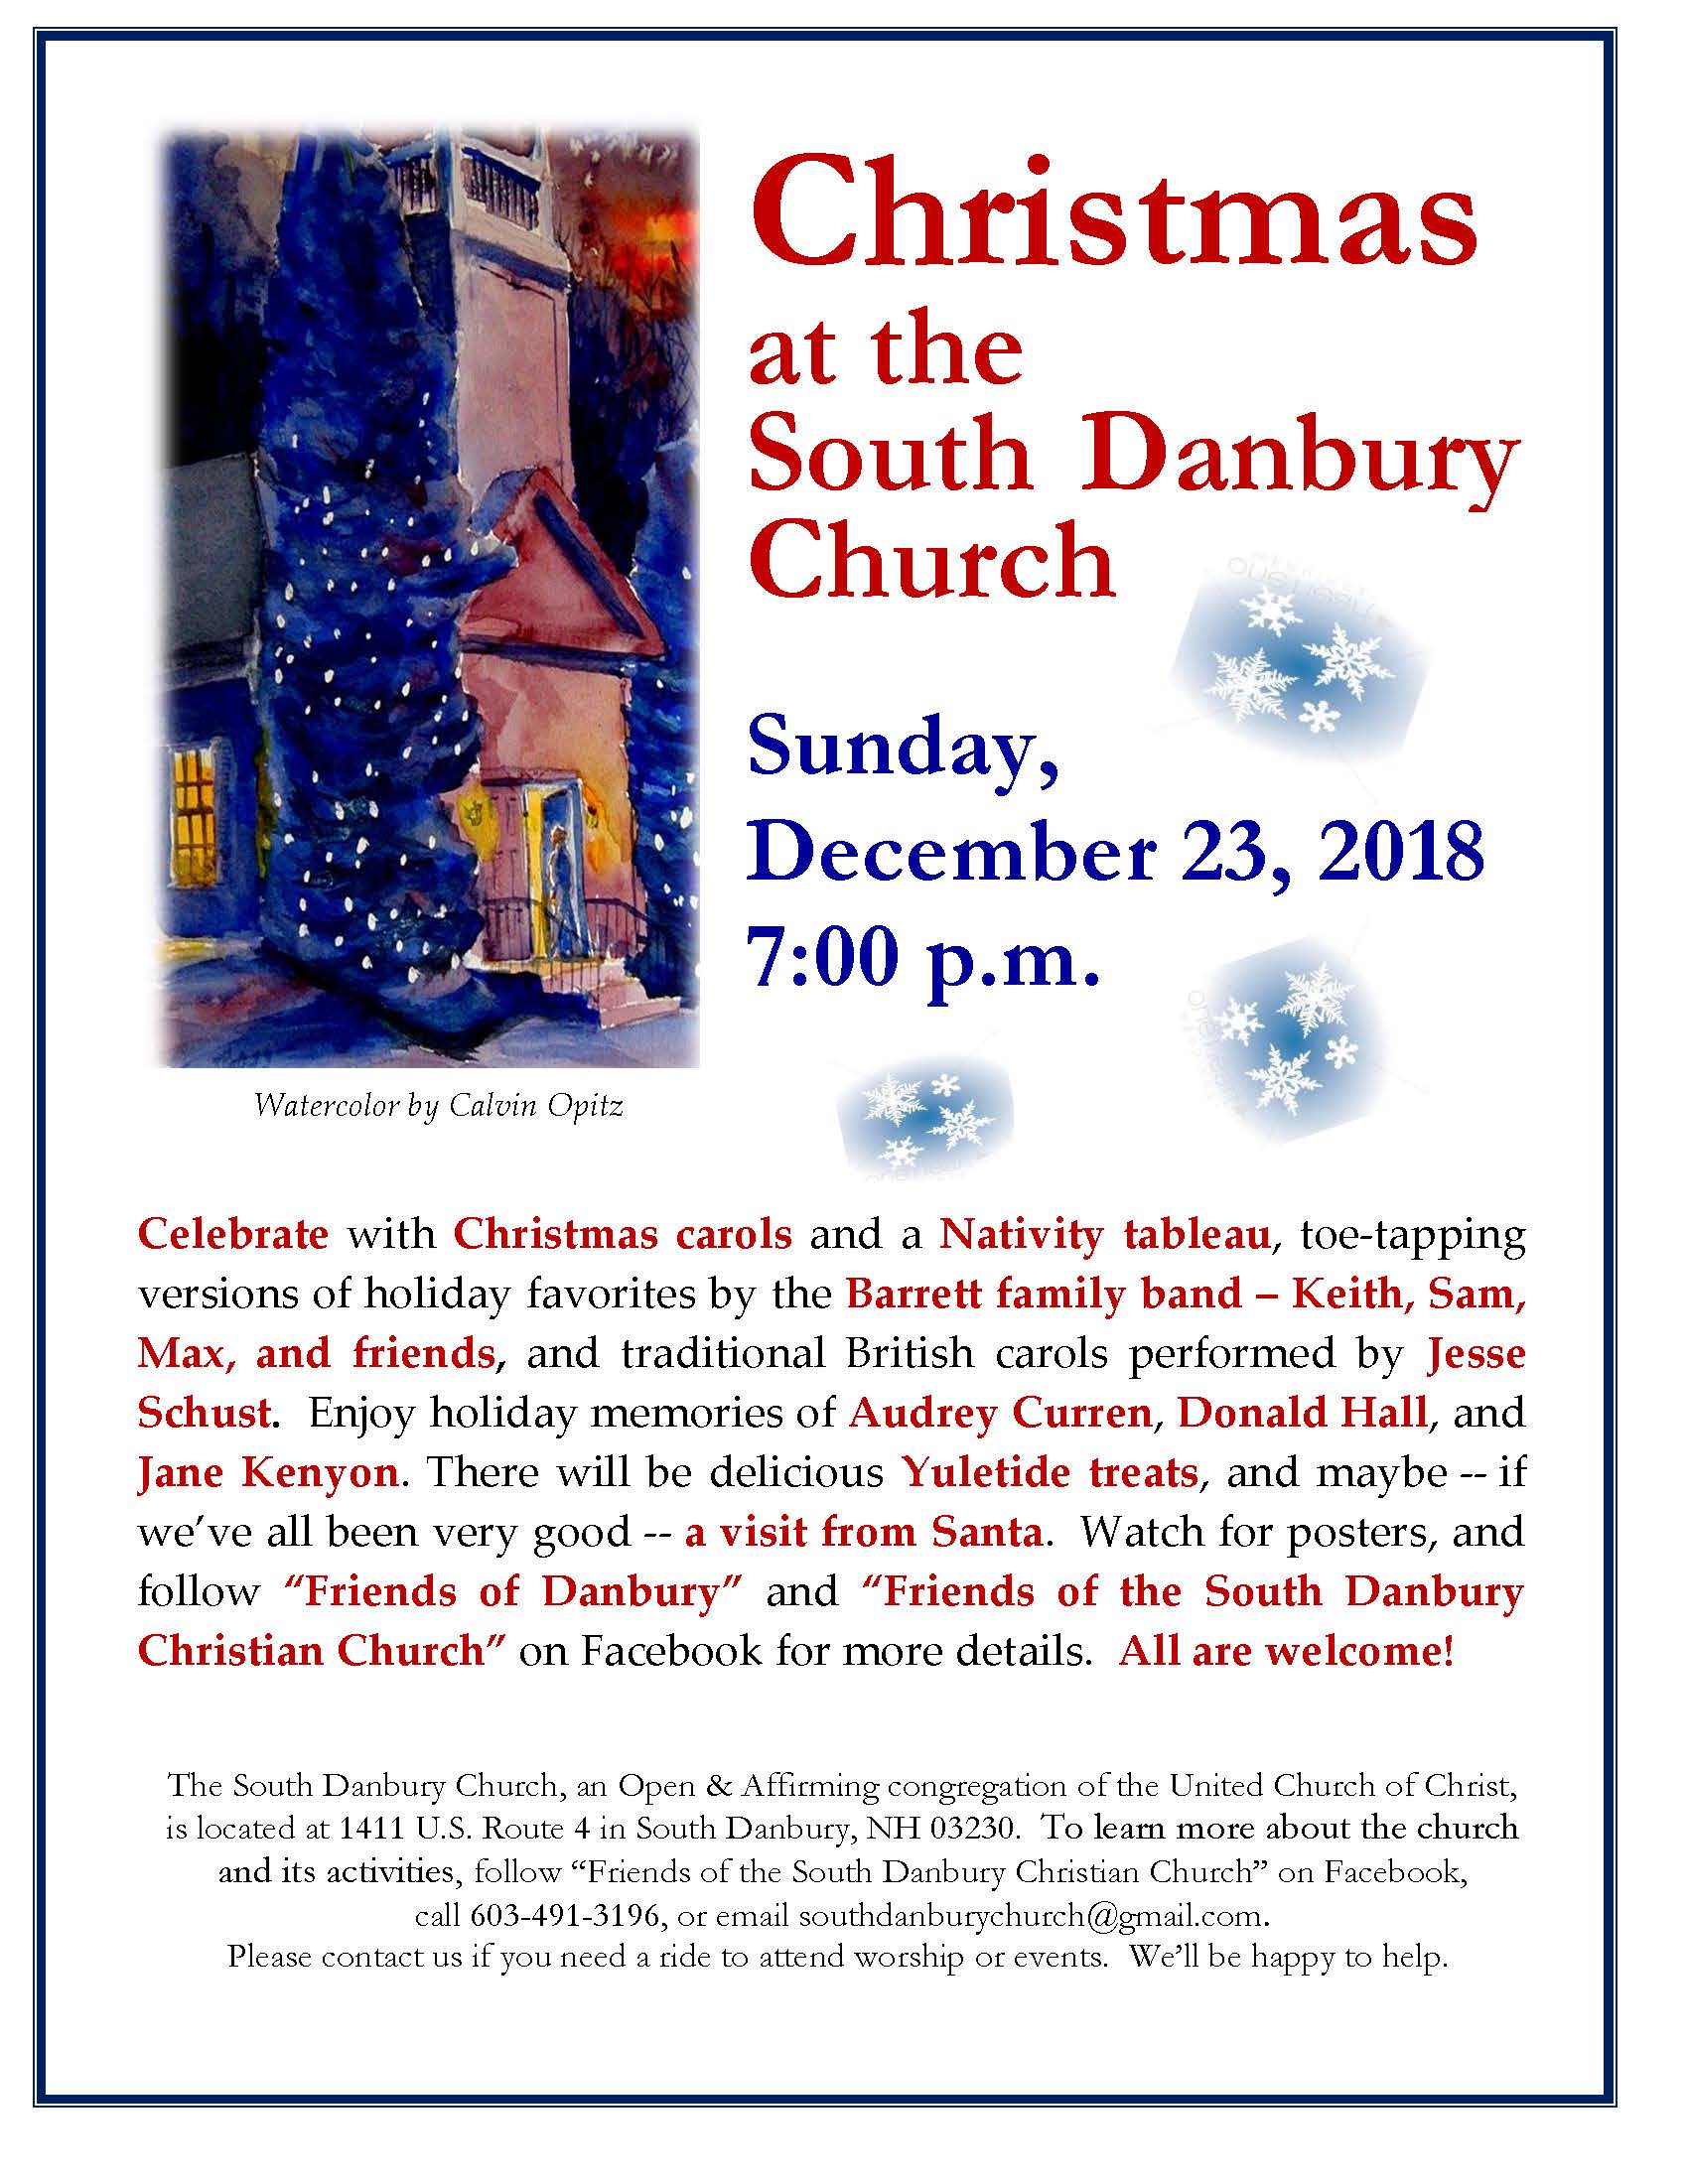 Christmas at South Danbury Christian Church | The Andover Beacon